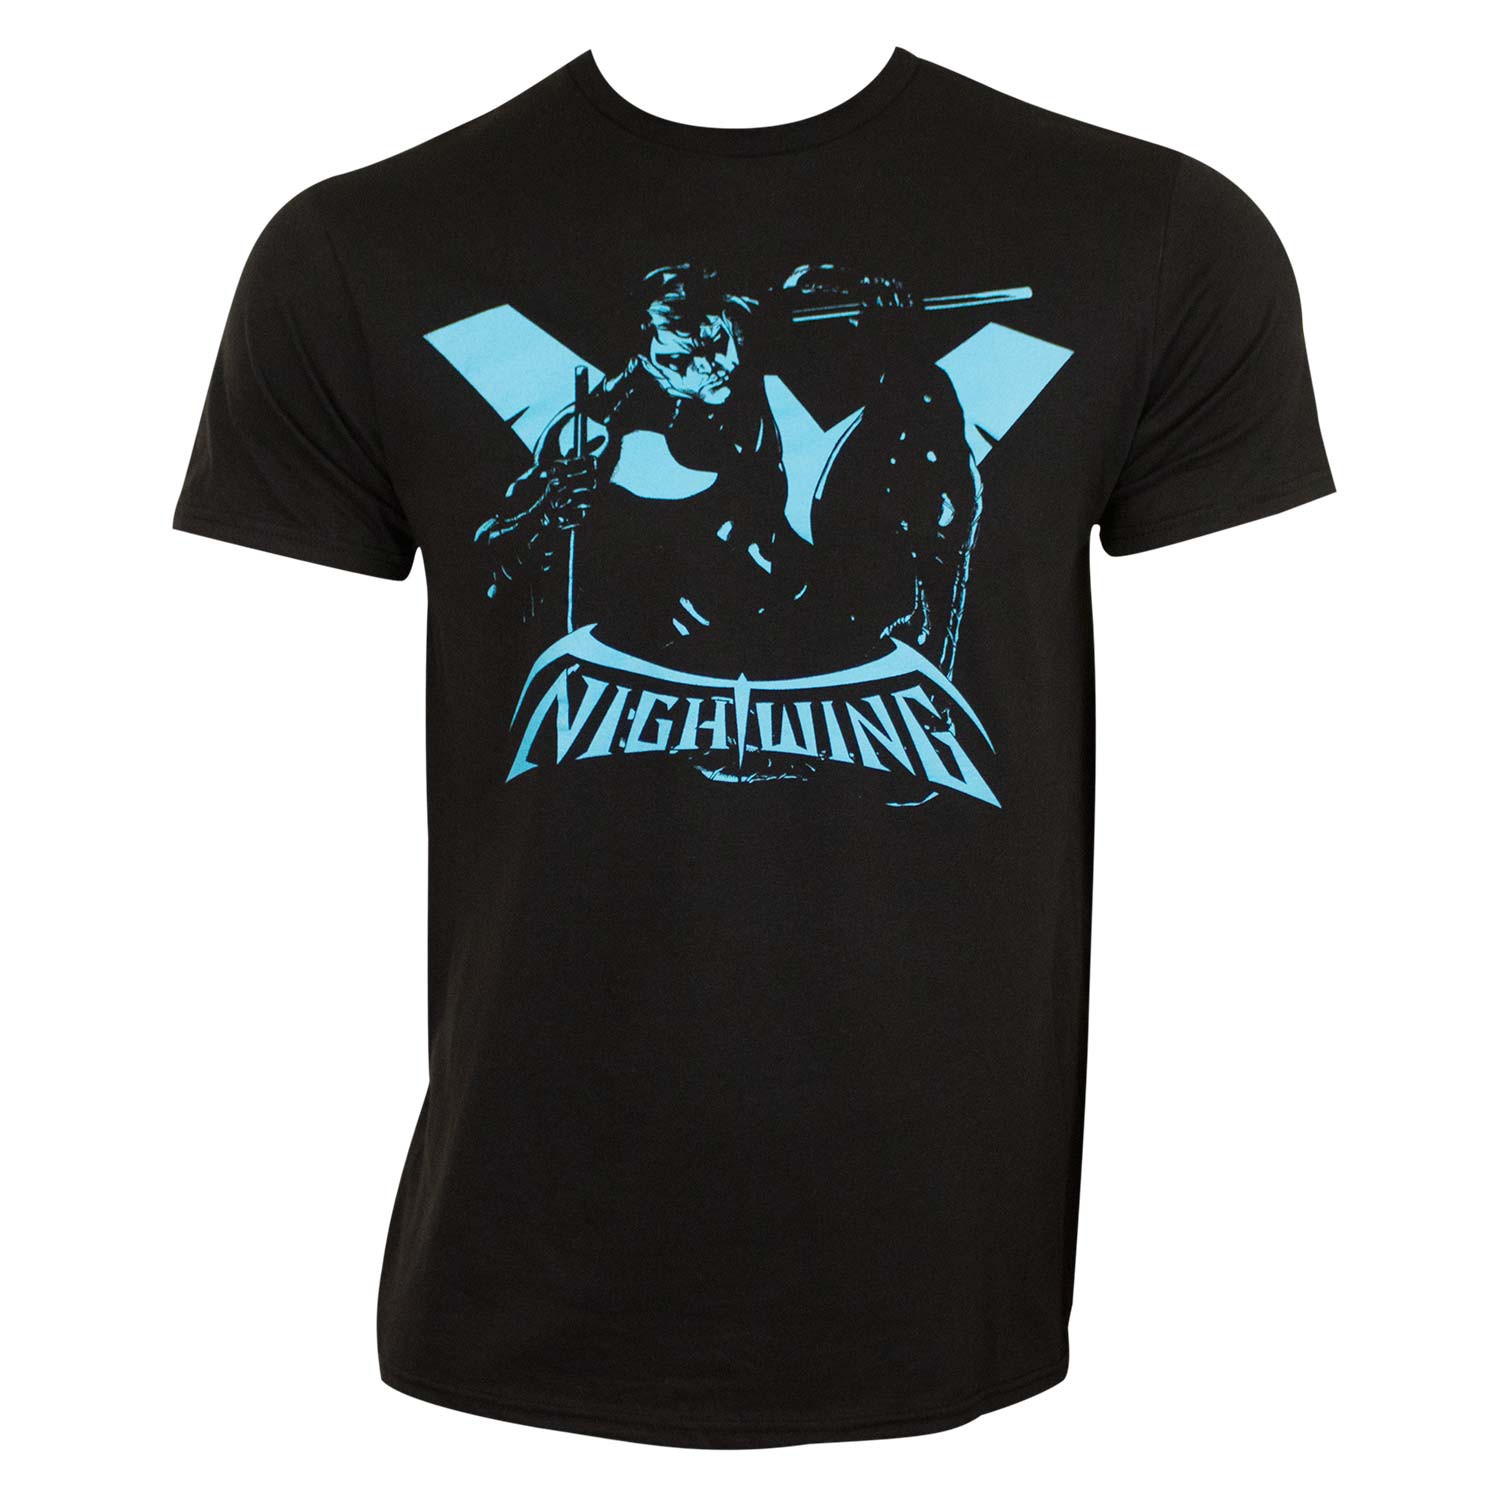 Nightwing Silhouette Tee Shirt